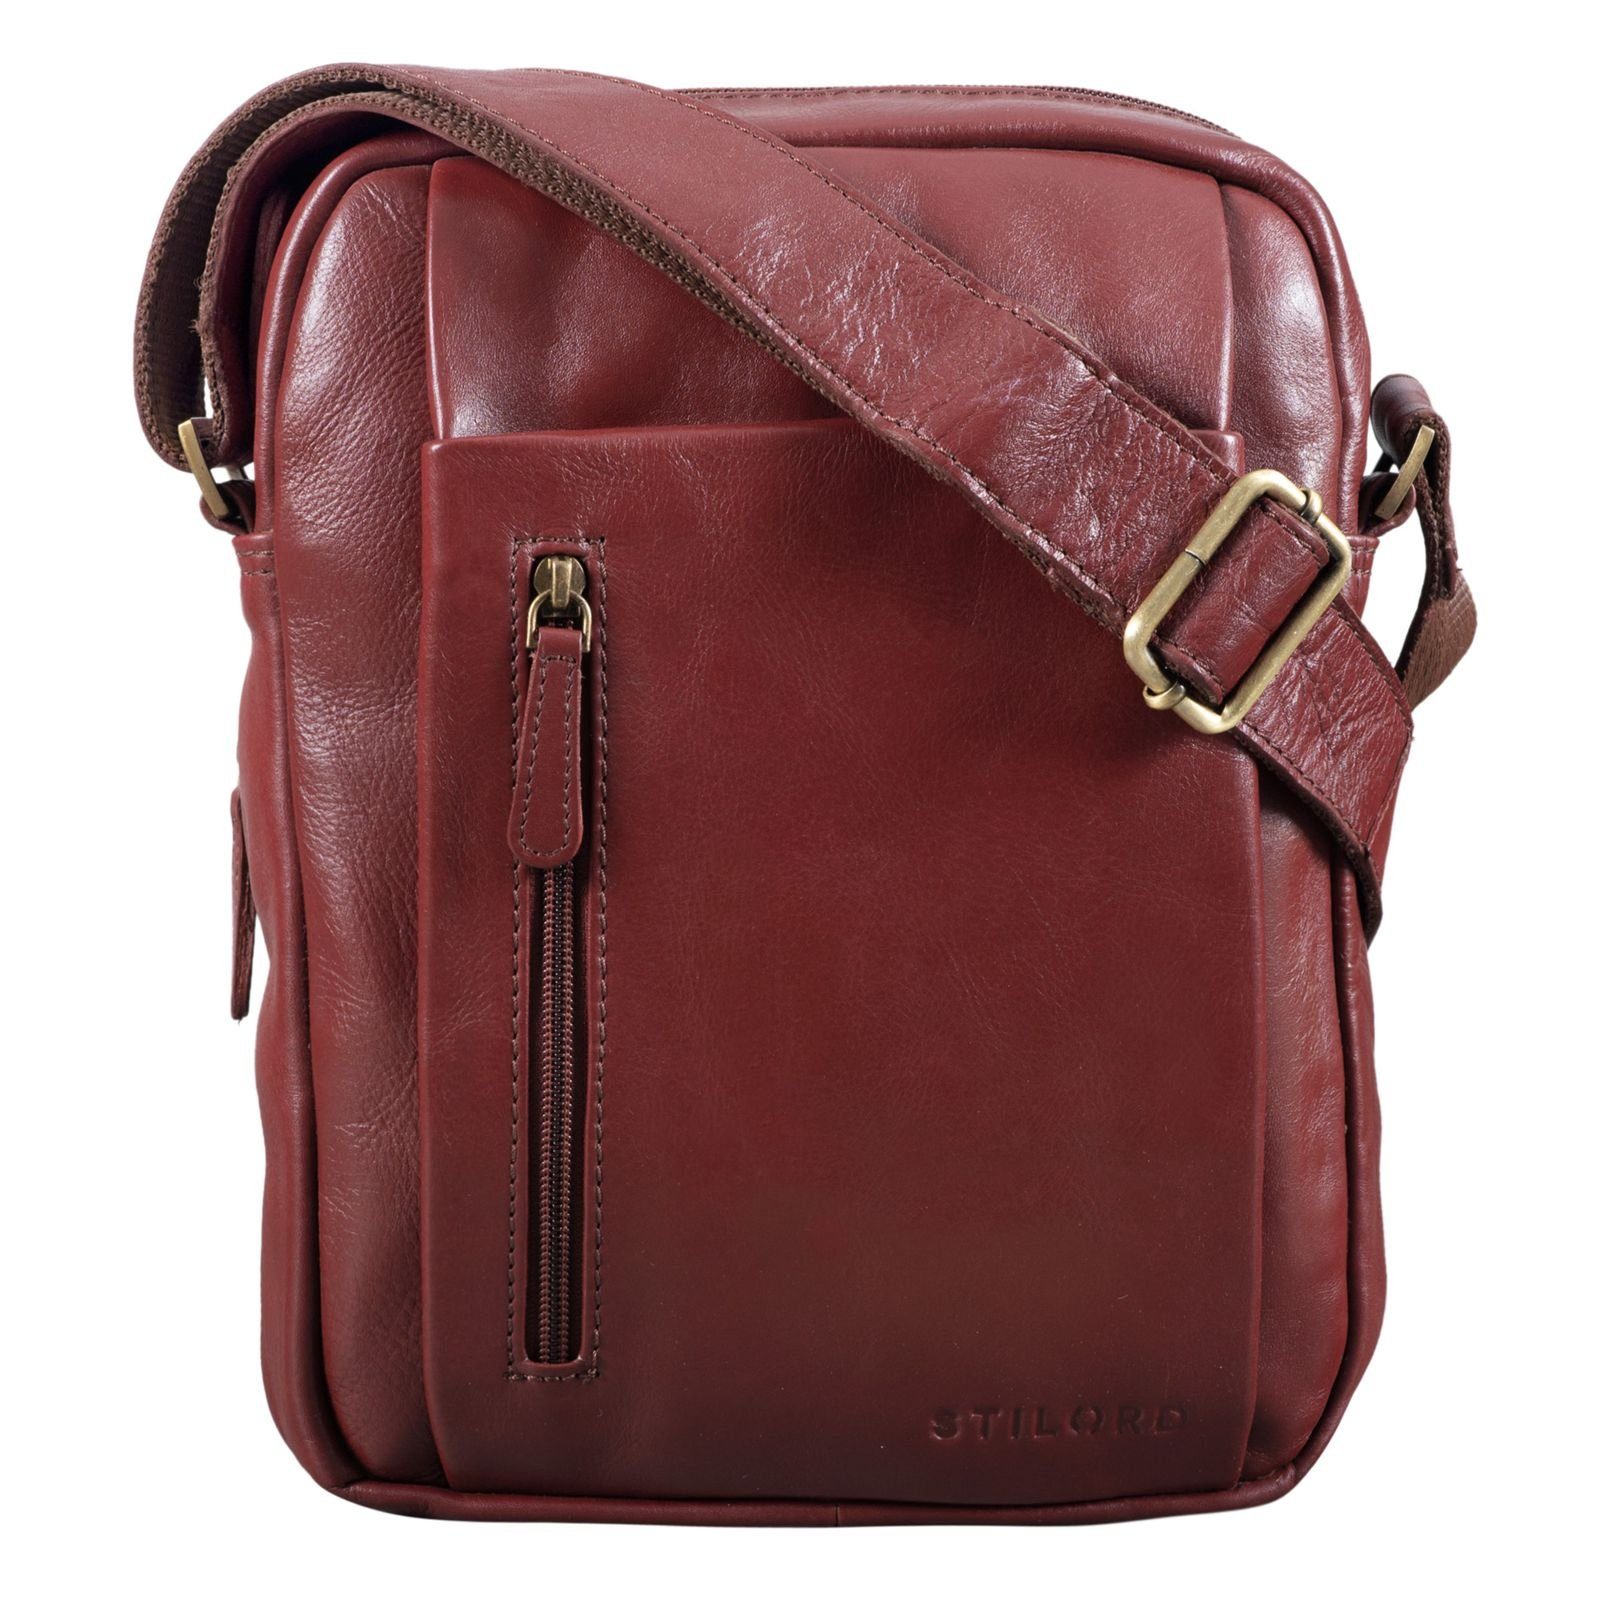 STILORD Messenger Bag "Irving" Vintage Leder Tasche Klein rot - braun